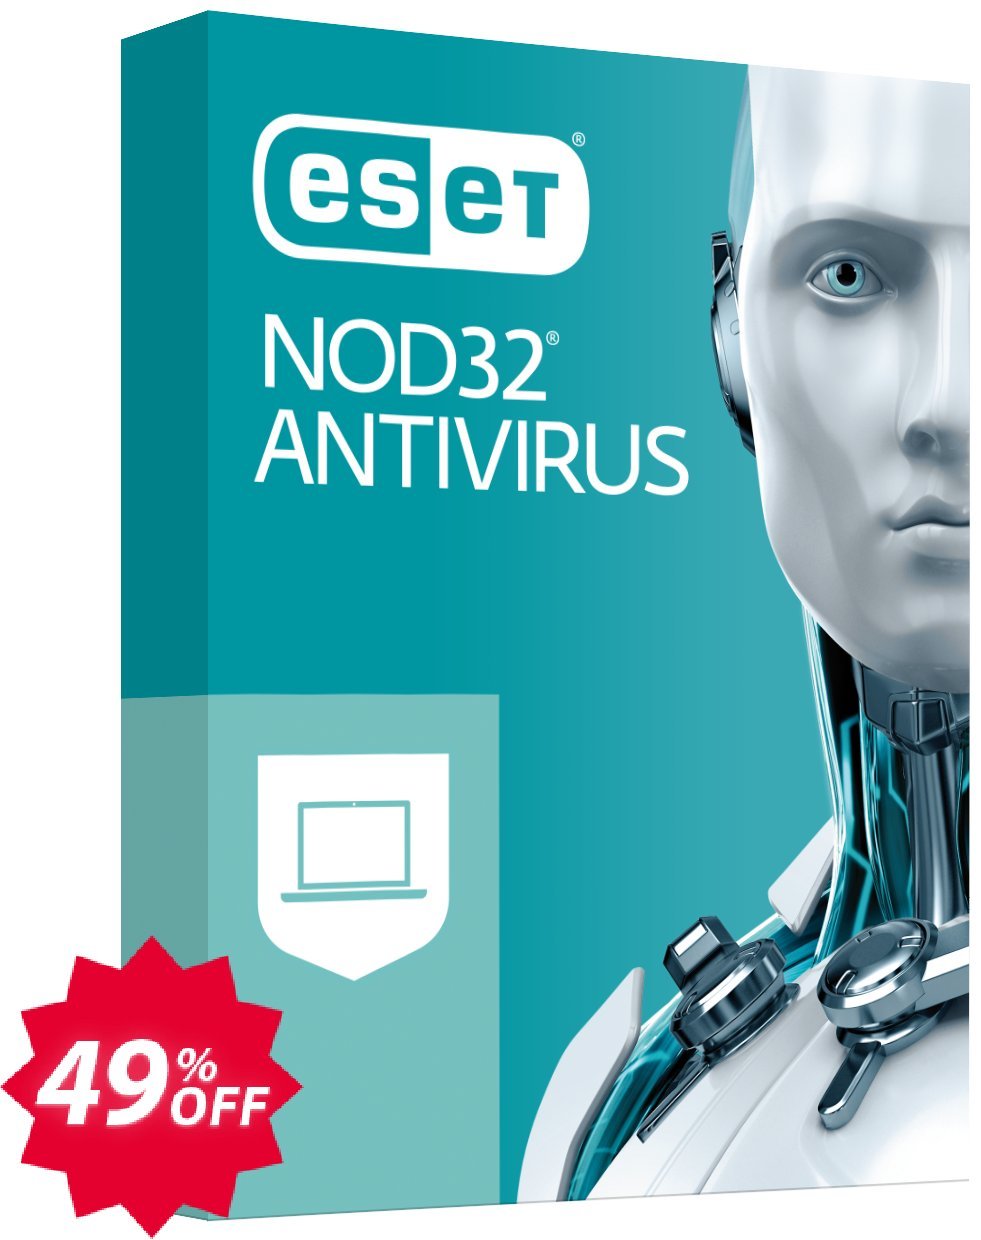 ESET NOD32 Antivirus - Renew Yearly 1 Device Coupon code 49% discount 